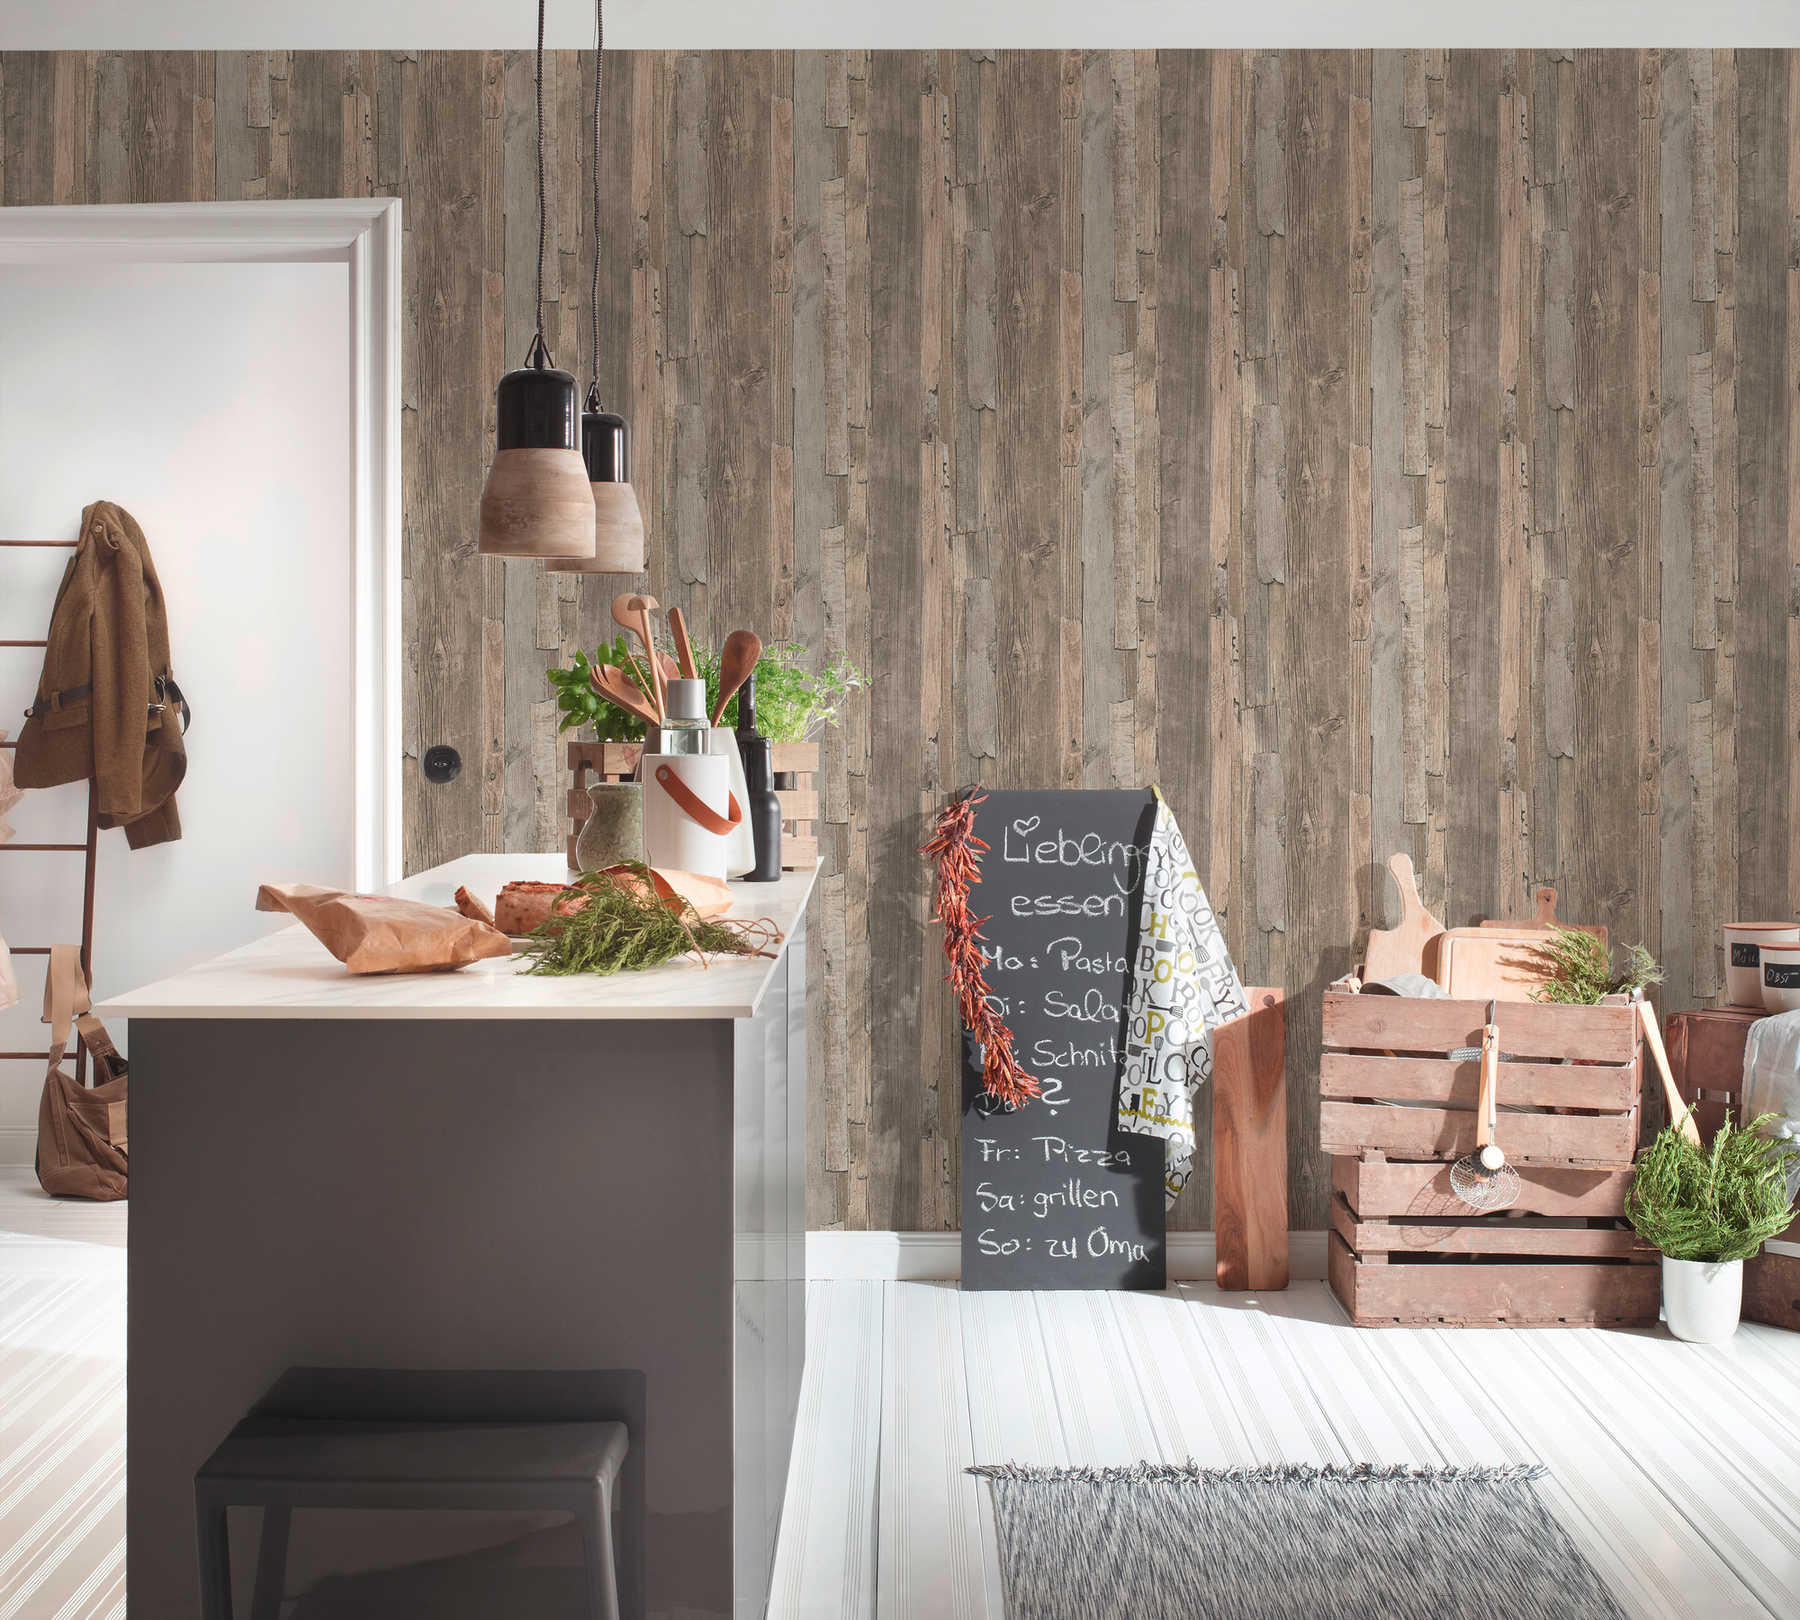             Wallpaper with board pattern, wood in used design - beige, brown
        